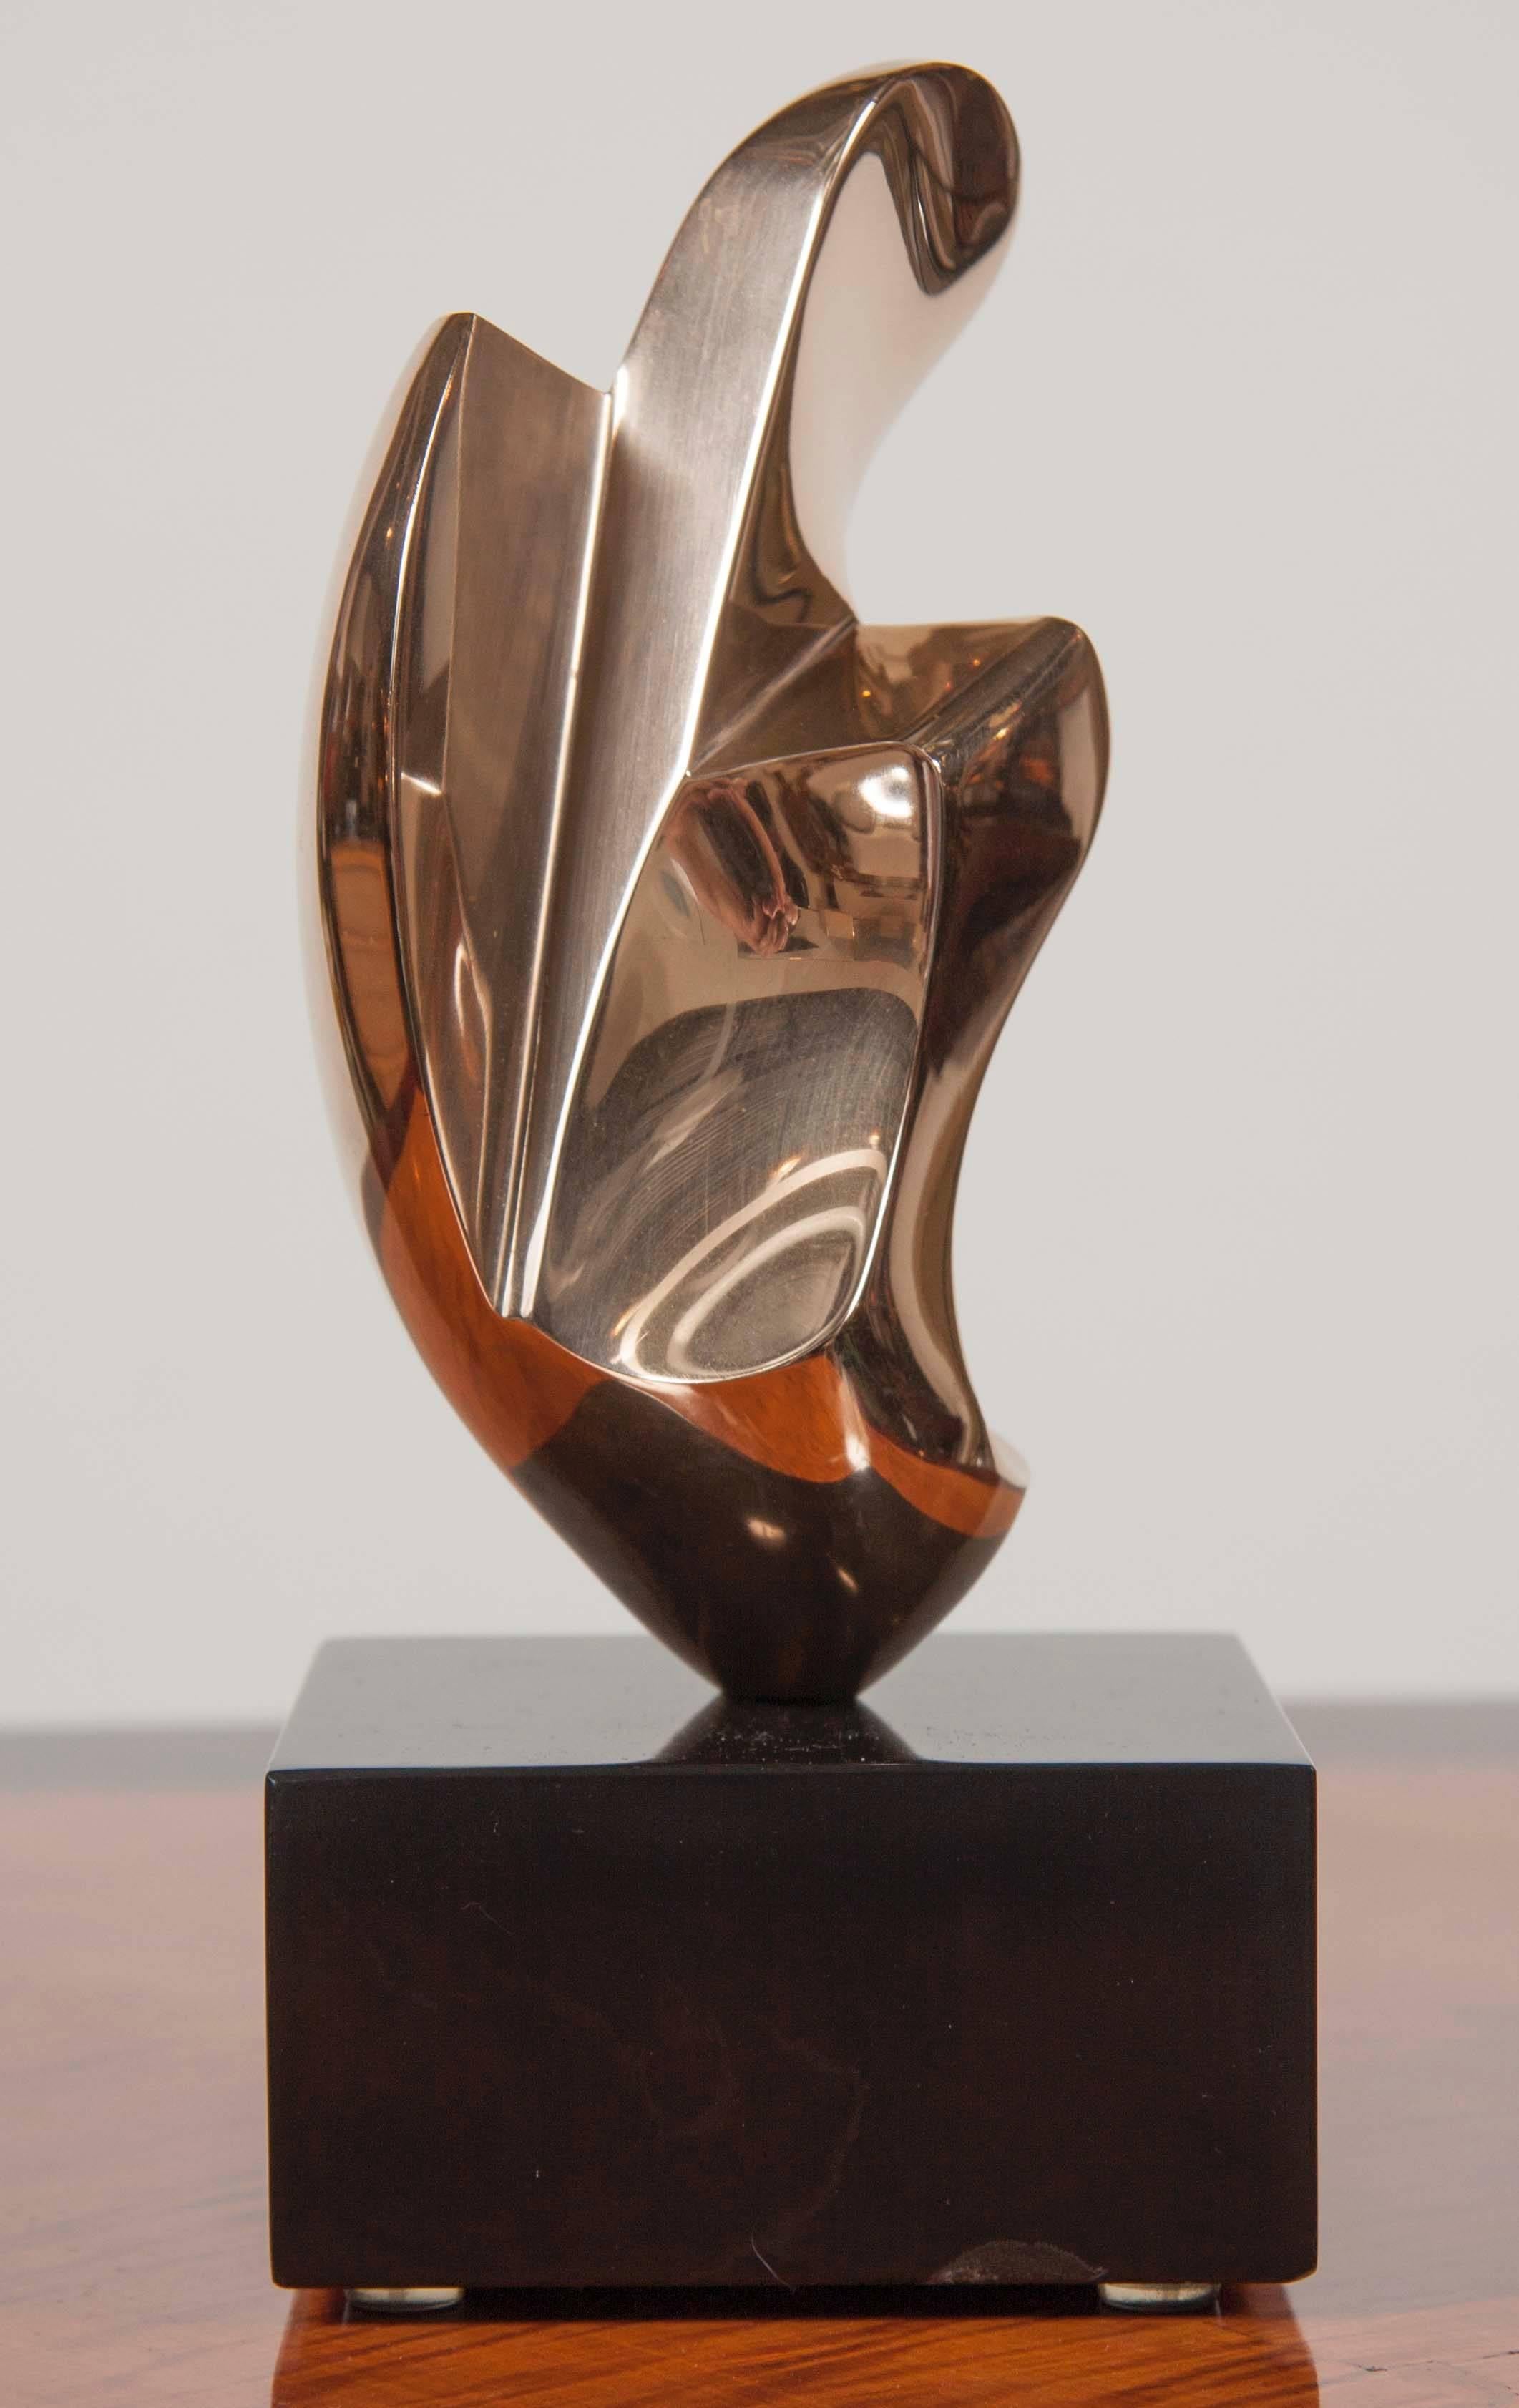 An interesting bronze sculpture by Antonio Grediaga Kieff. Signed 